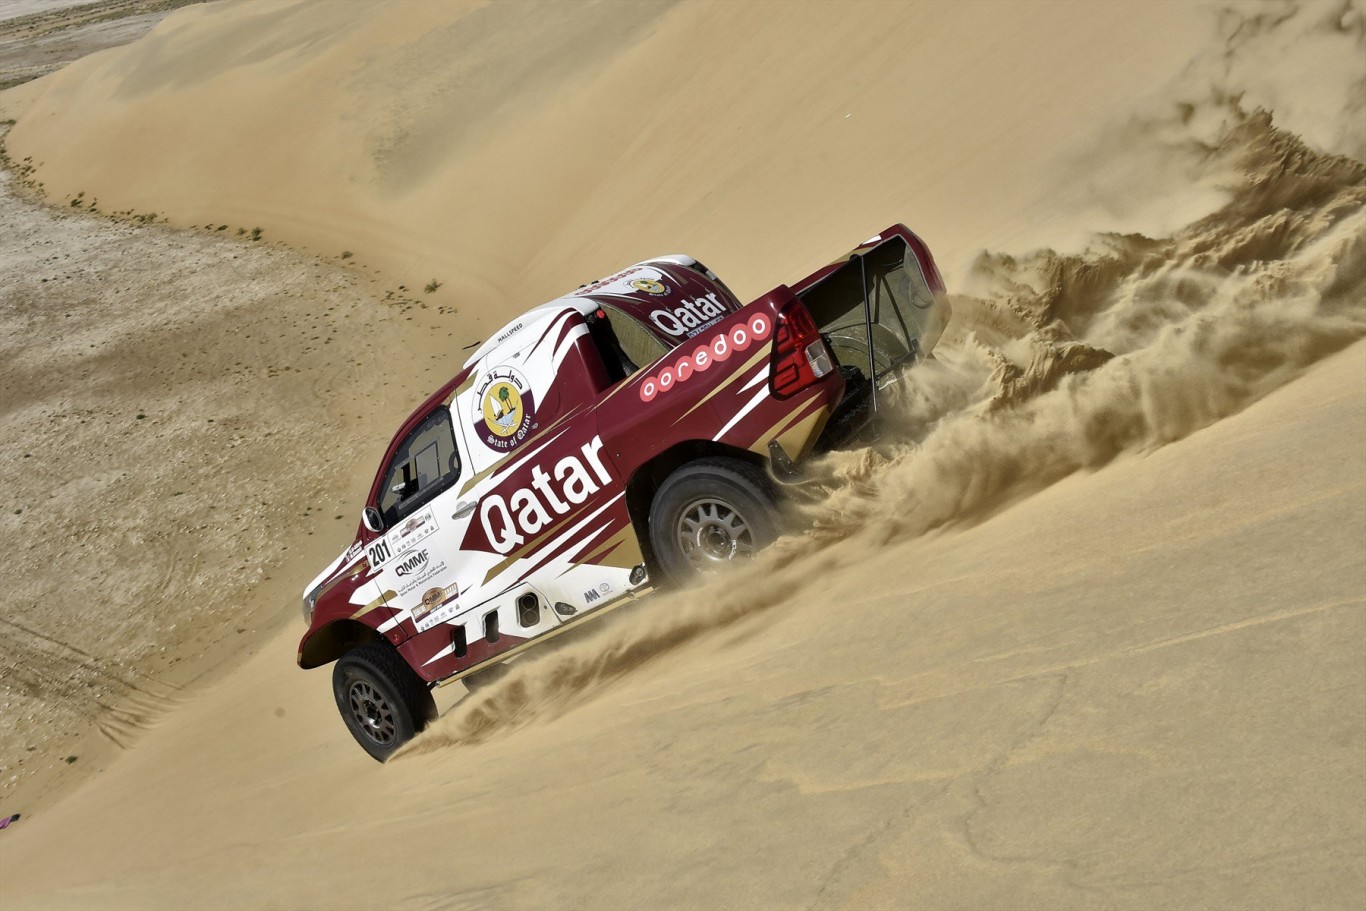 SA-built Toyota Hilux still in lead as Al -Attiyah wins 4th consecutive stage in Qatar